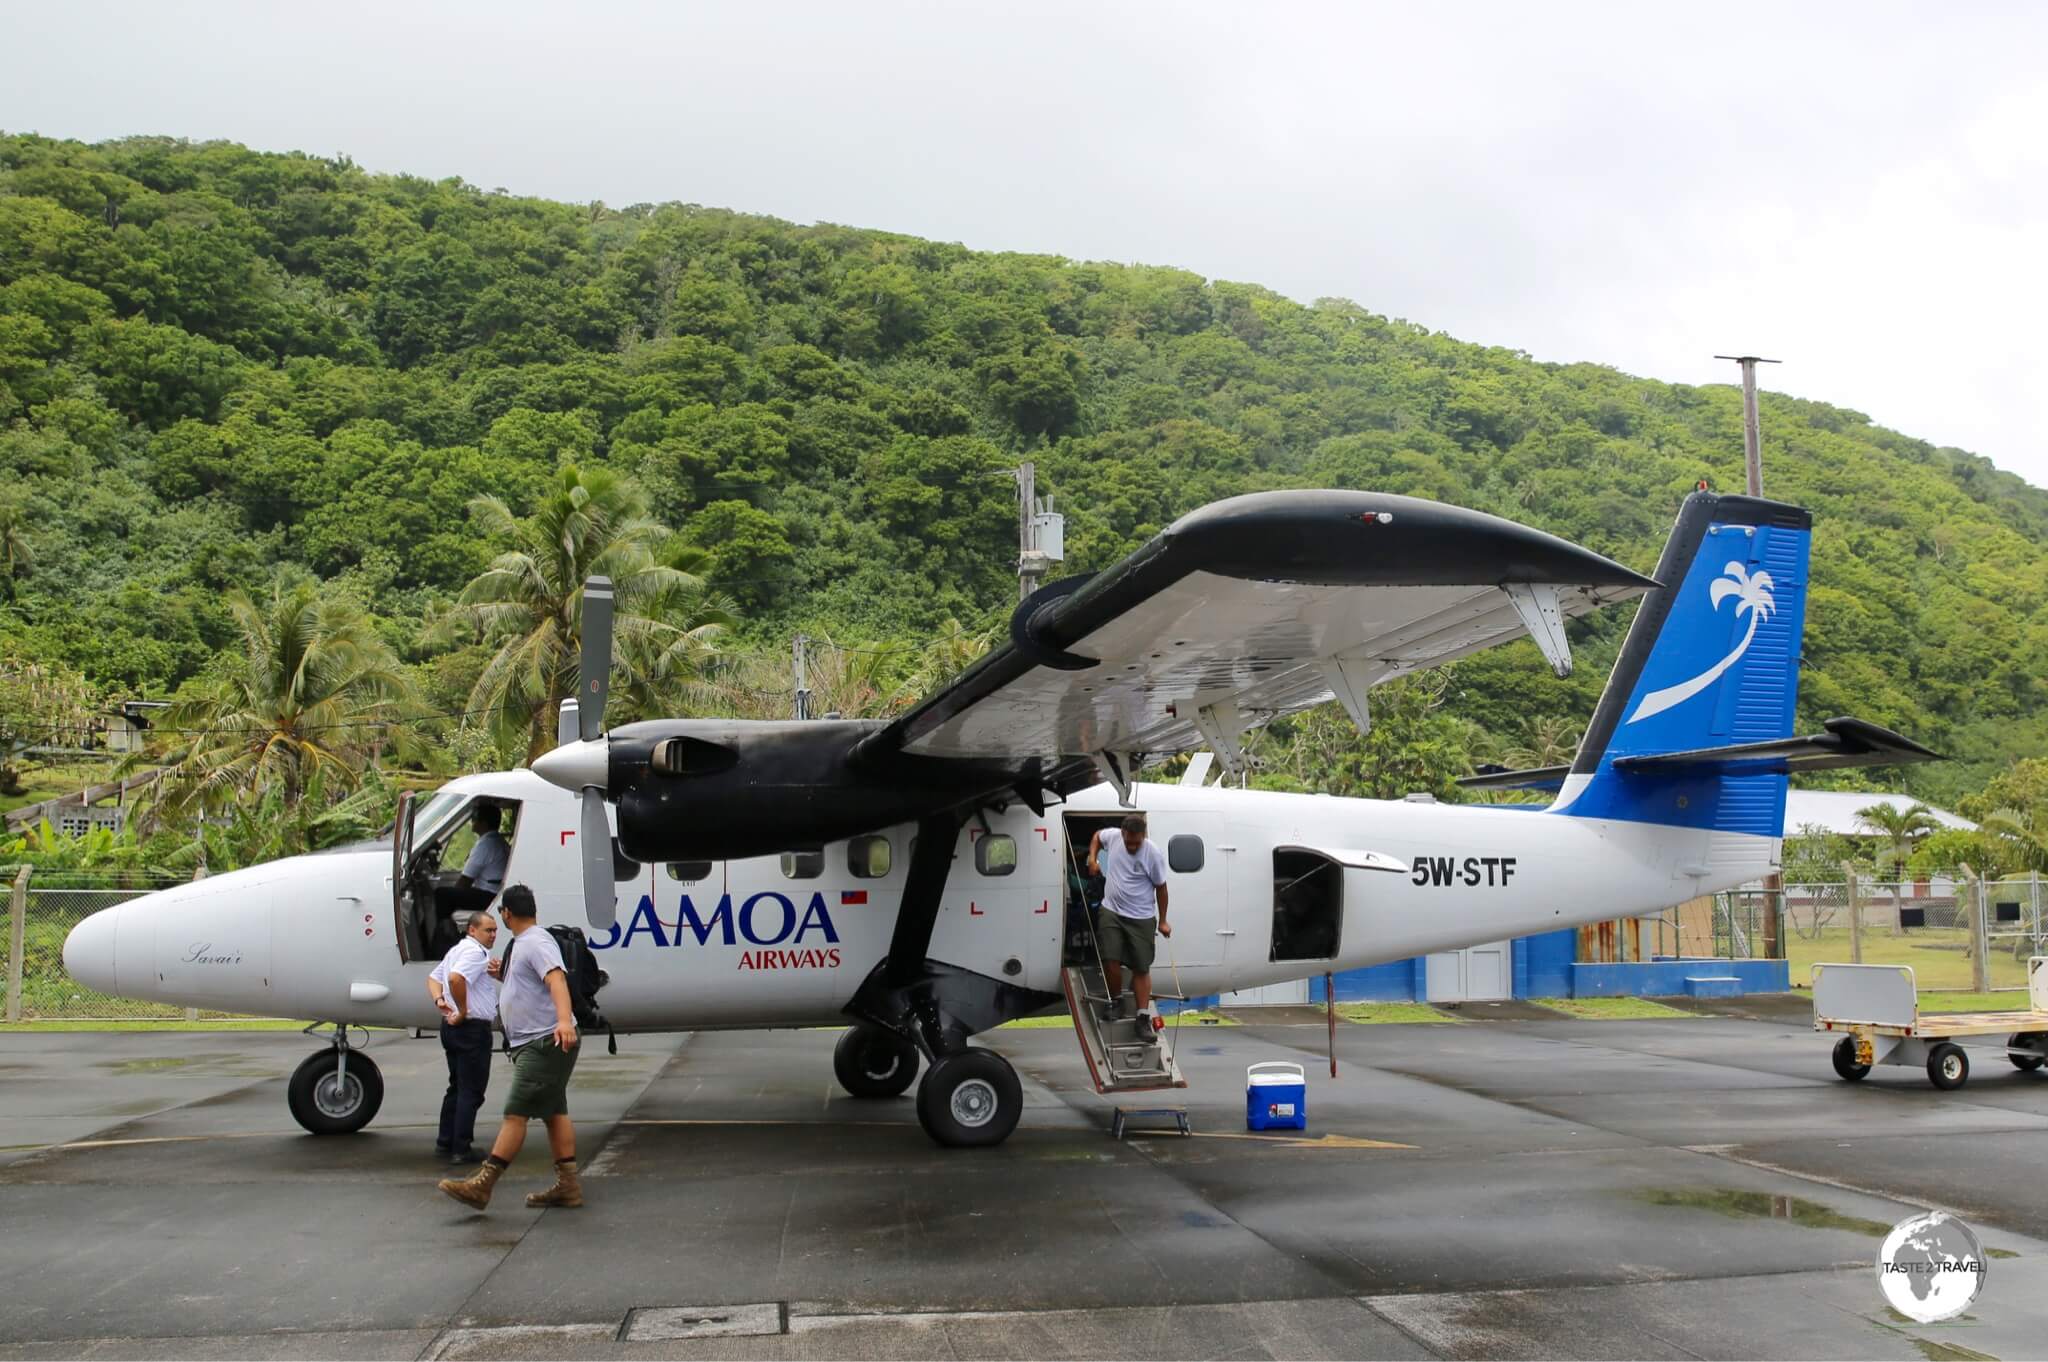 Arriving on Ta'u with Samoa Airways who provide all domestic flights in American Samoa.